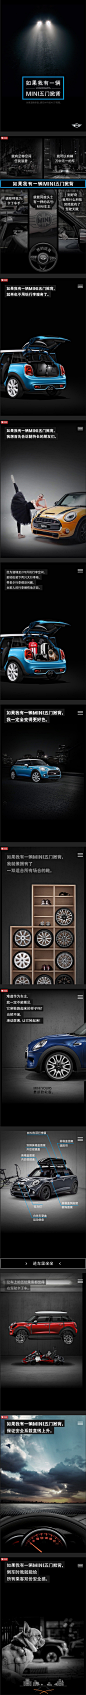 MINI 第一代MINI五门掀背H5汽车营销手机网站 - - 黄蜂网woofeng.cn